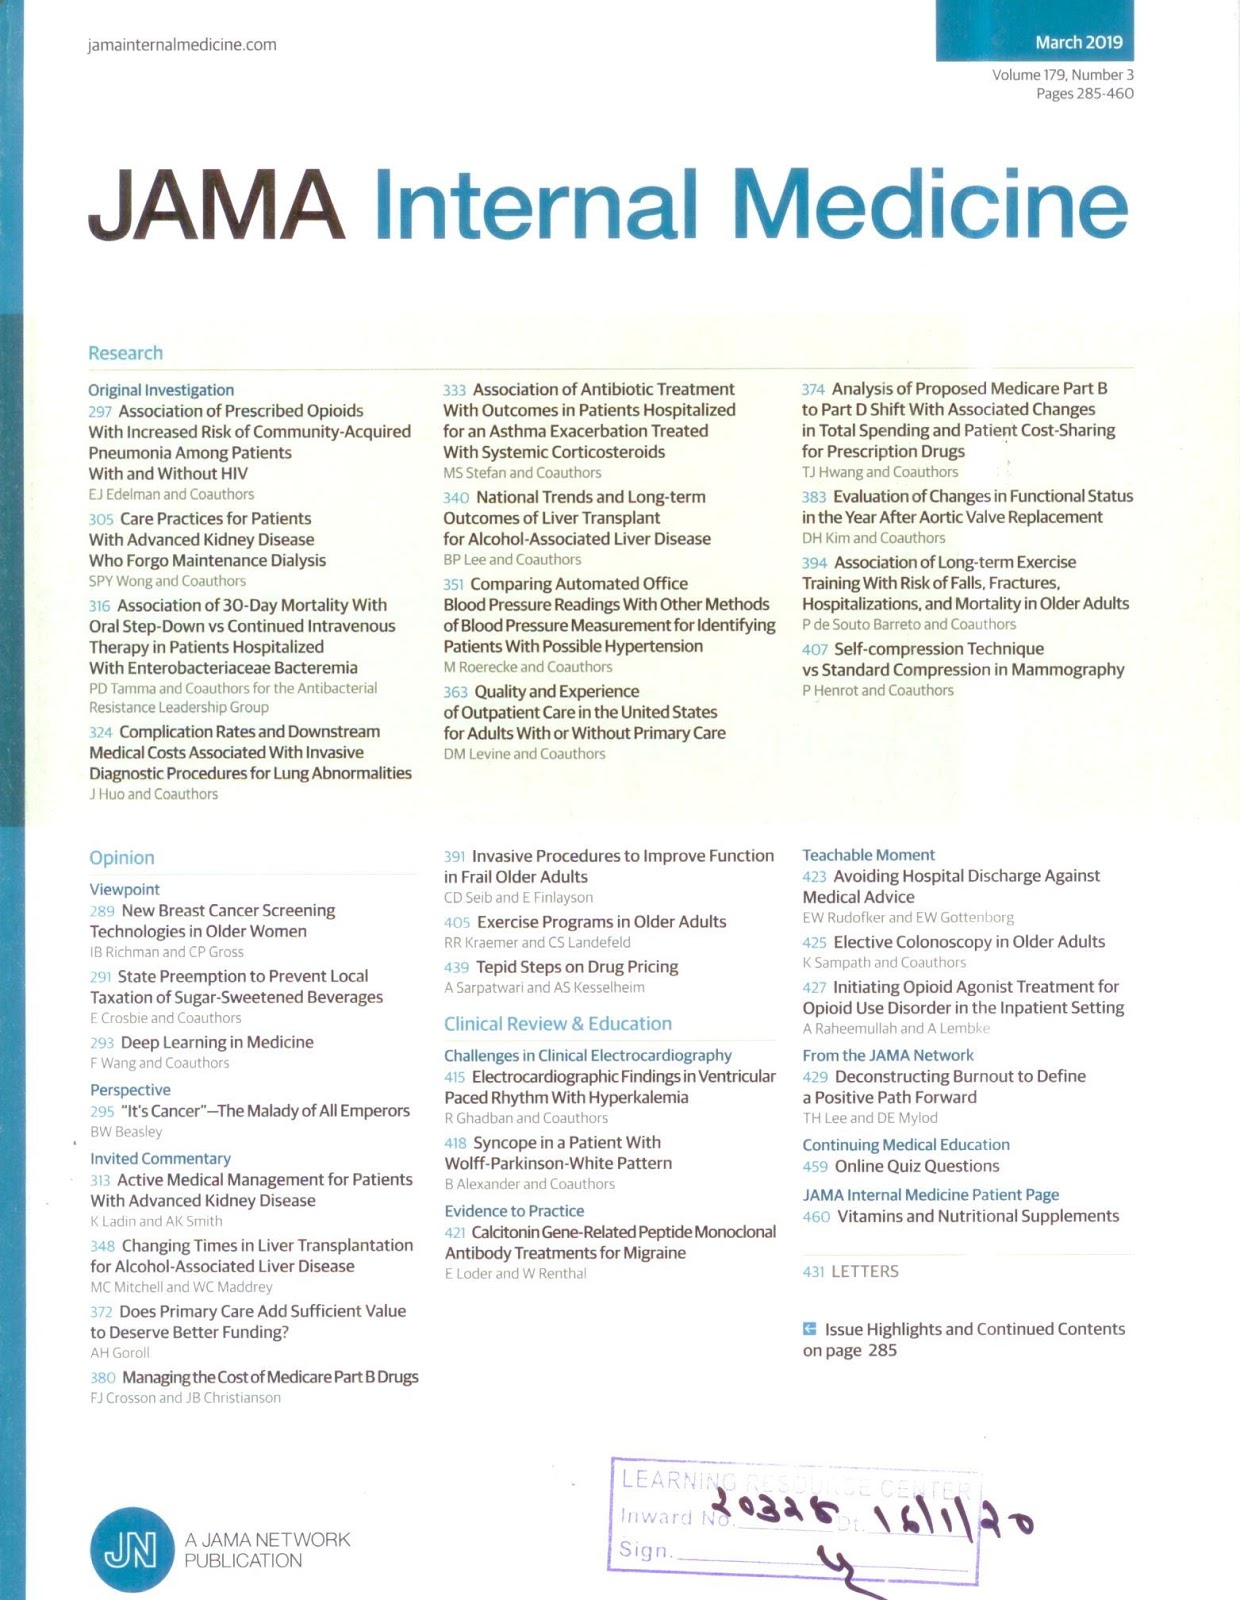 https://jamanetwork.com/journals/jamainternalmedicine/issue/179/3